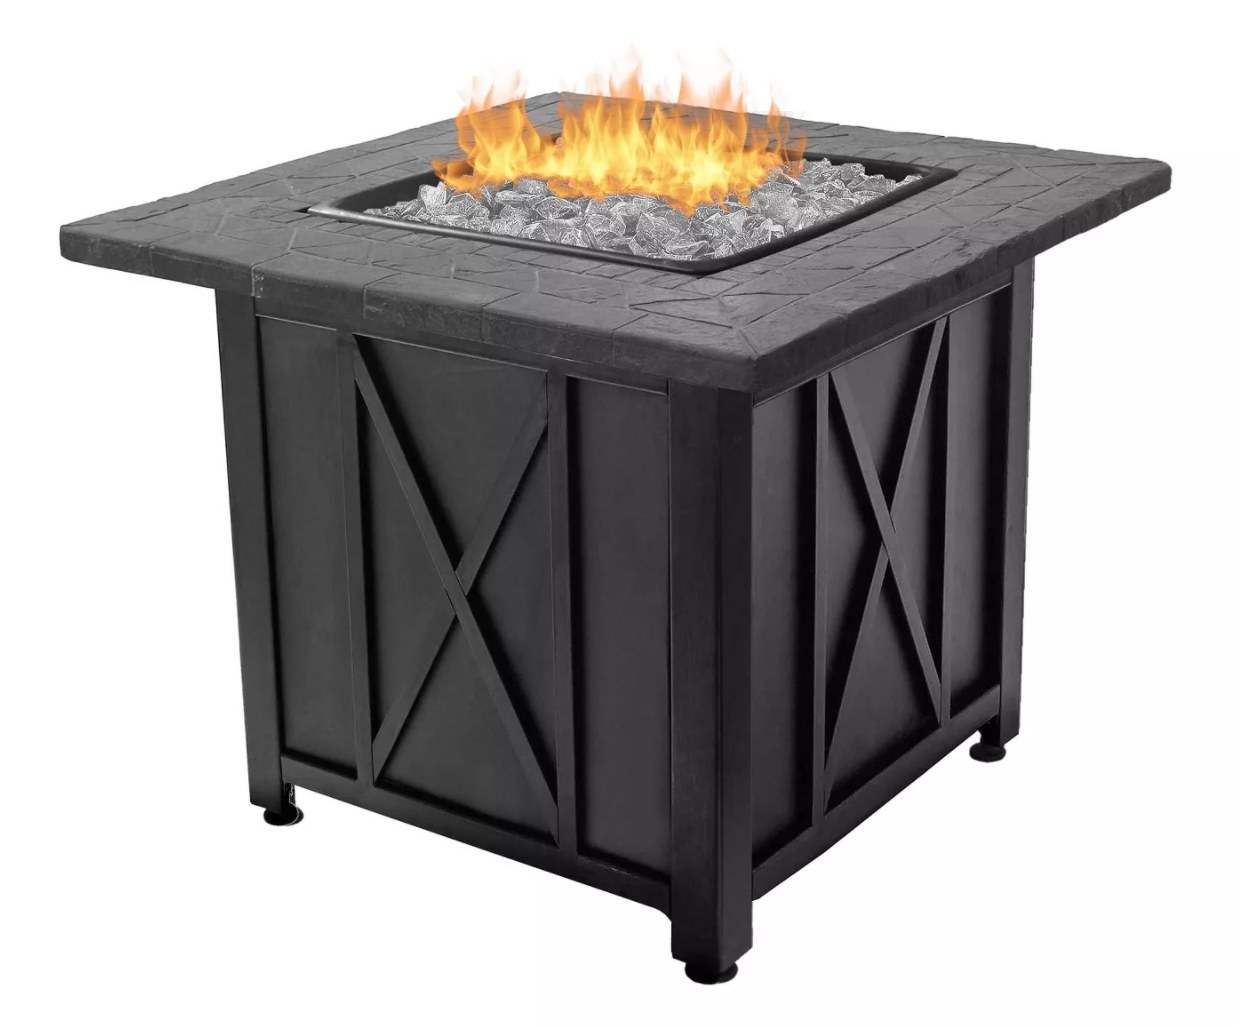 A black firepit table